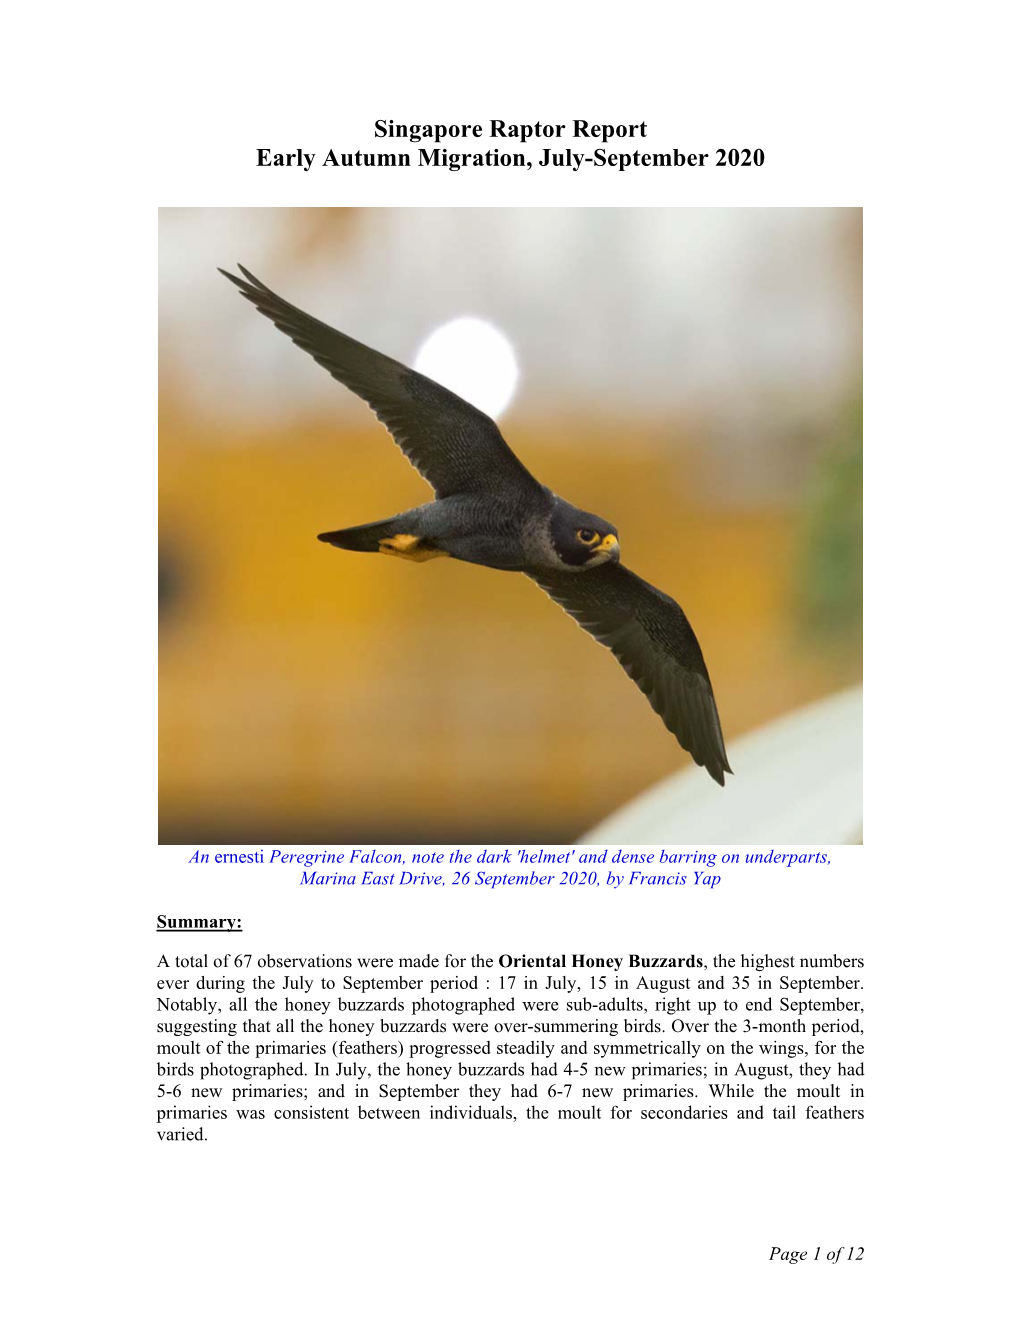 Singapore Raptor Report, Early Autumn Migration, Jul-Sep 2020